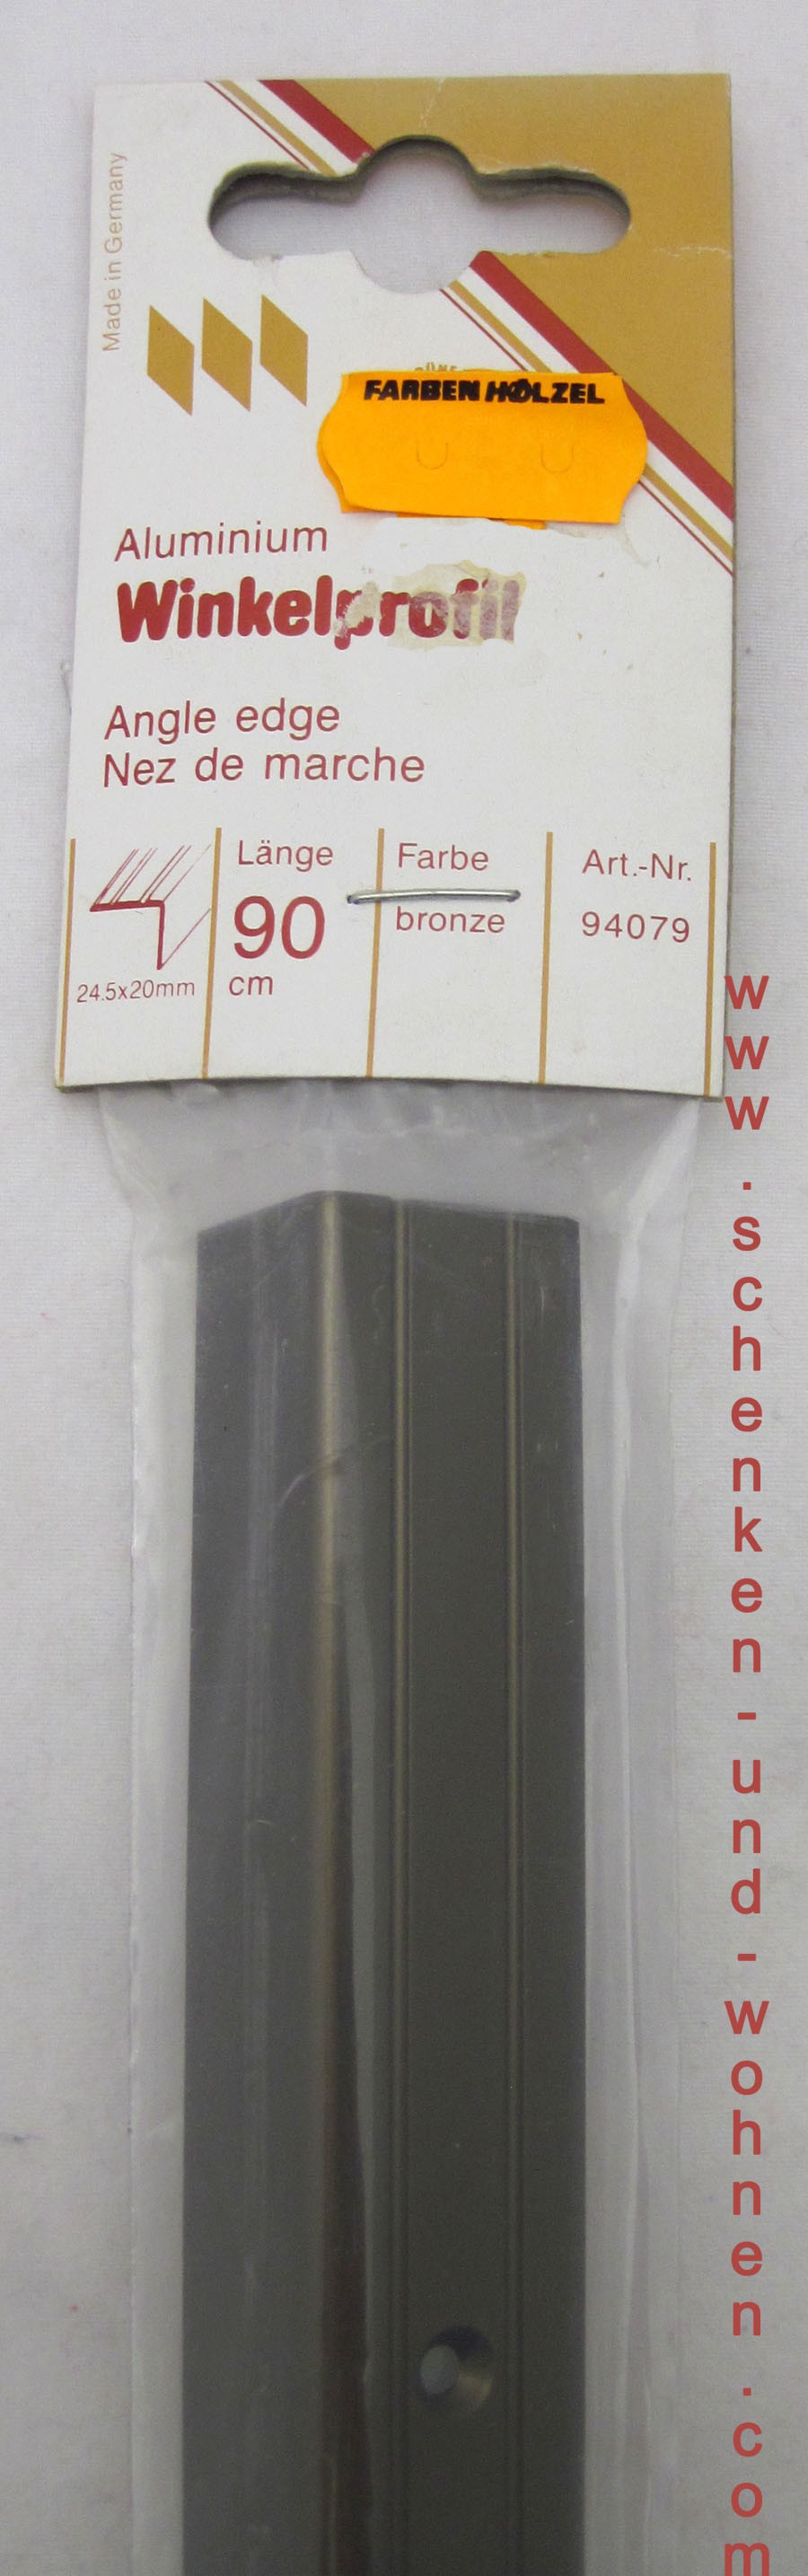 Winkelprofill Bodenprofil bronze dunkel 24,5x20mmx90 cm